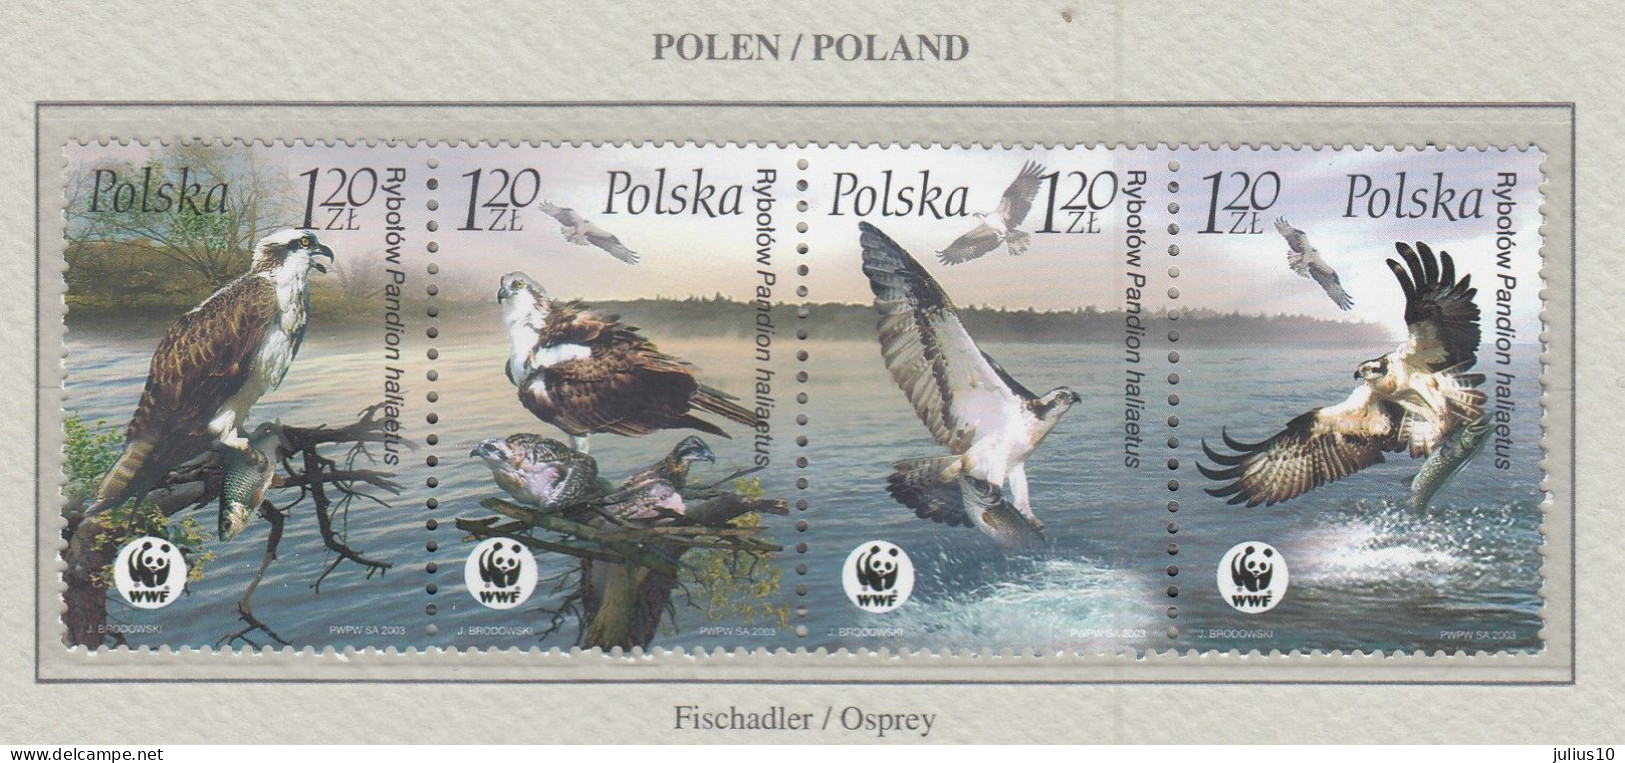 POLAND 2003 WWF Birds Of Prey Mi 4079-4082 MNH Fauna 674 - Eagles & Birds Of Prey